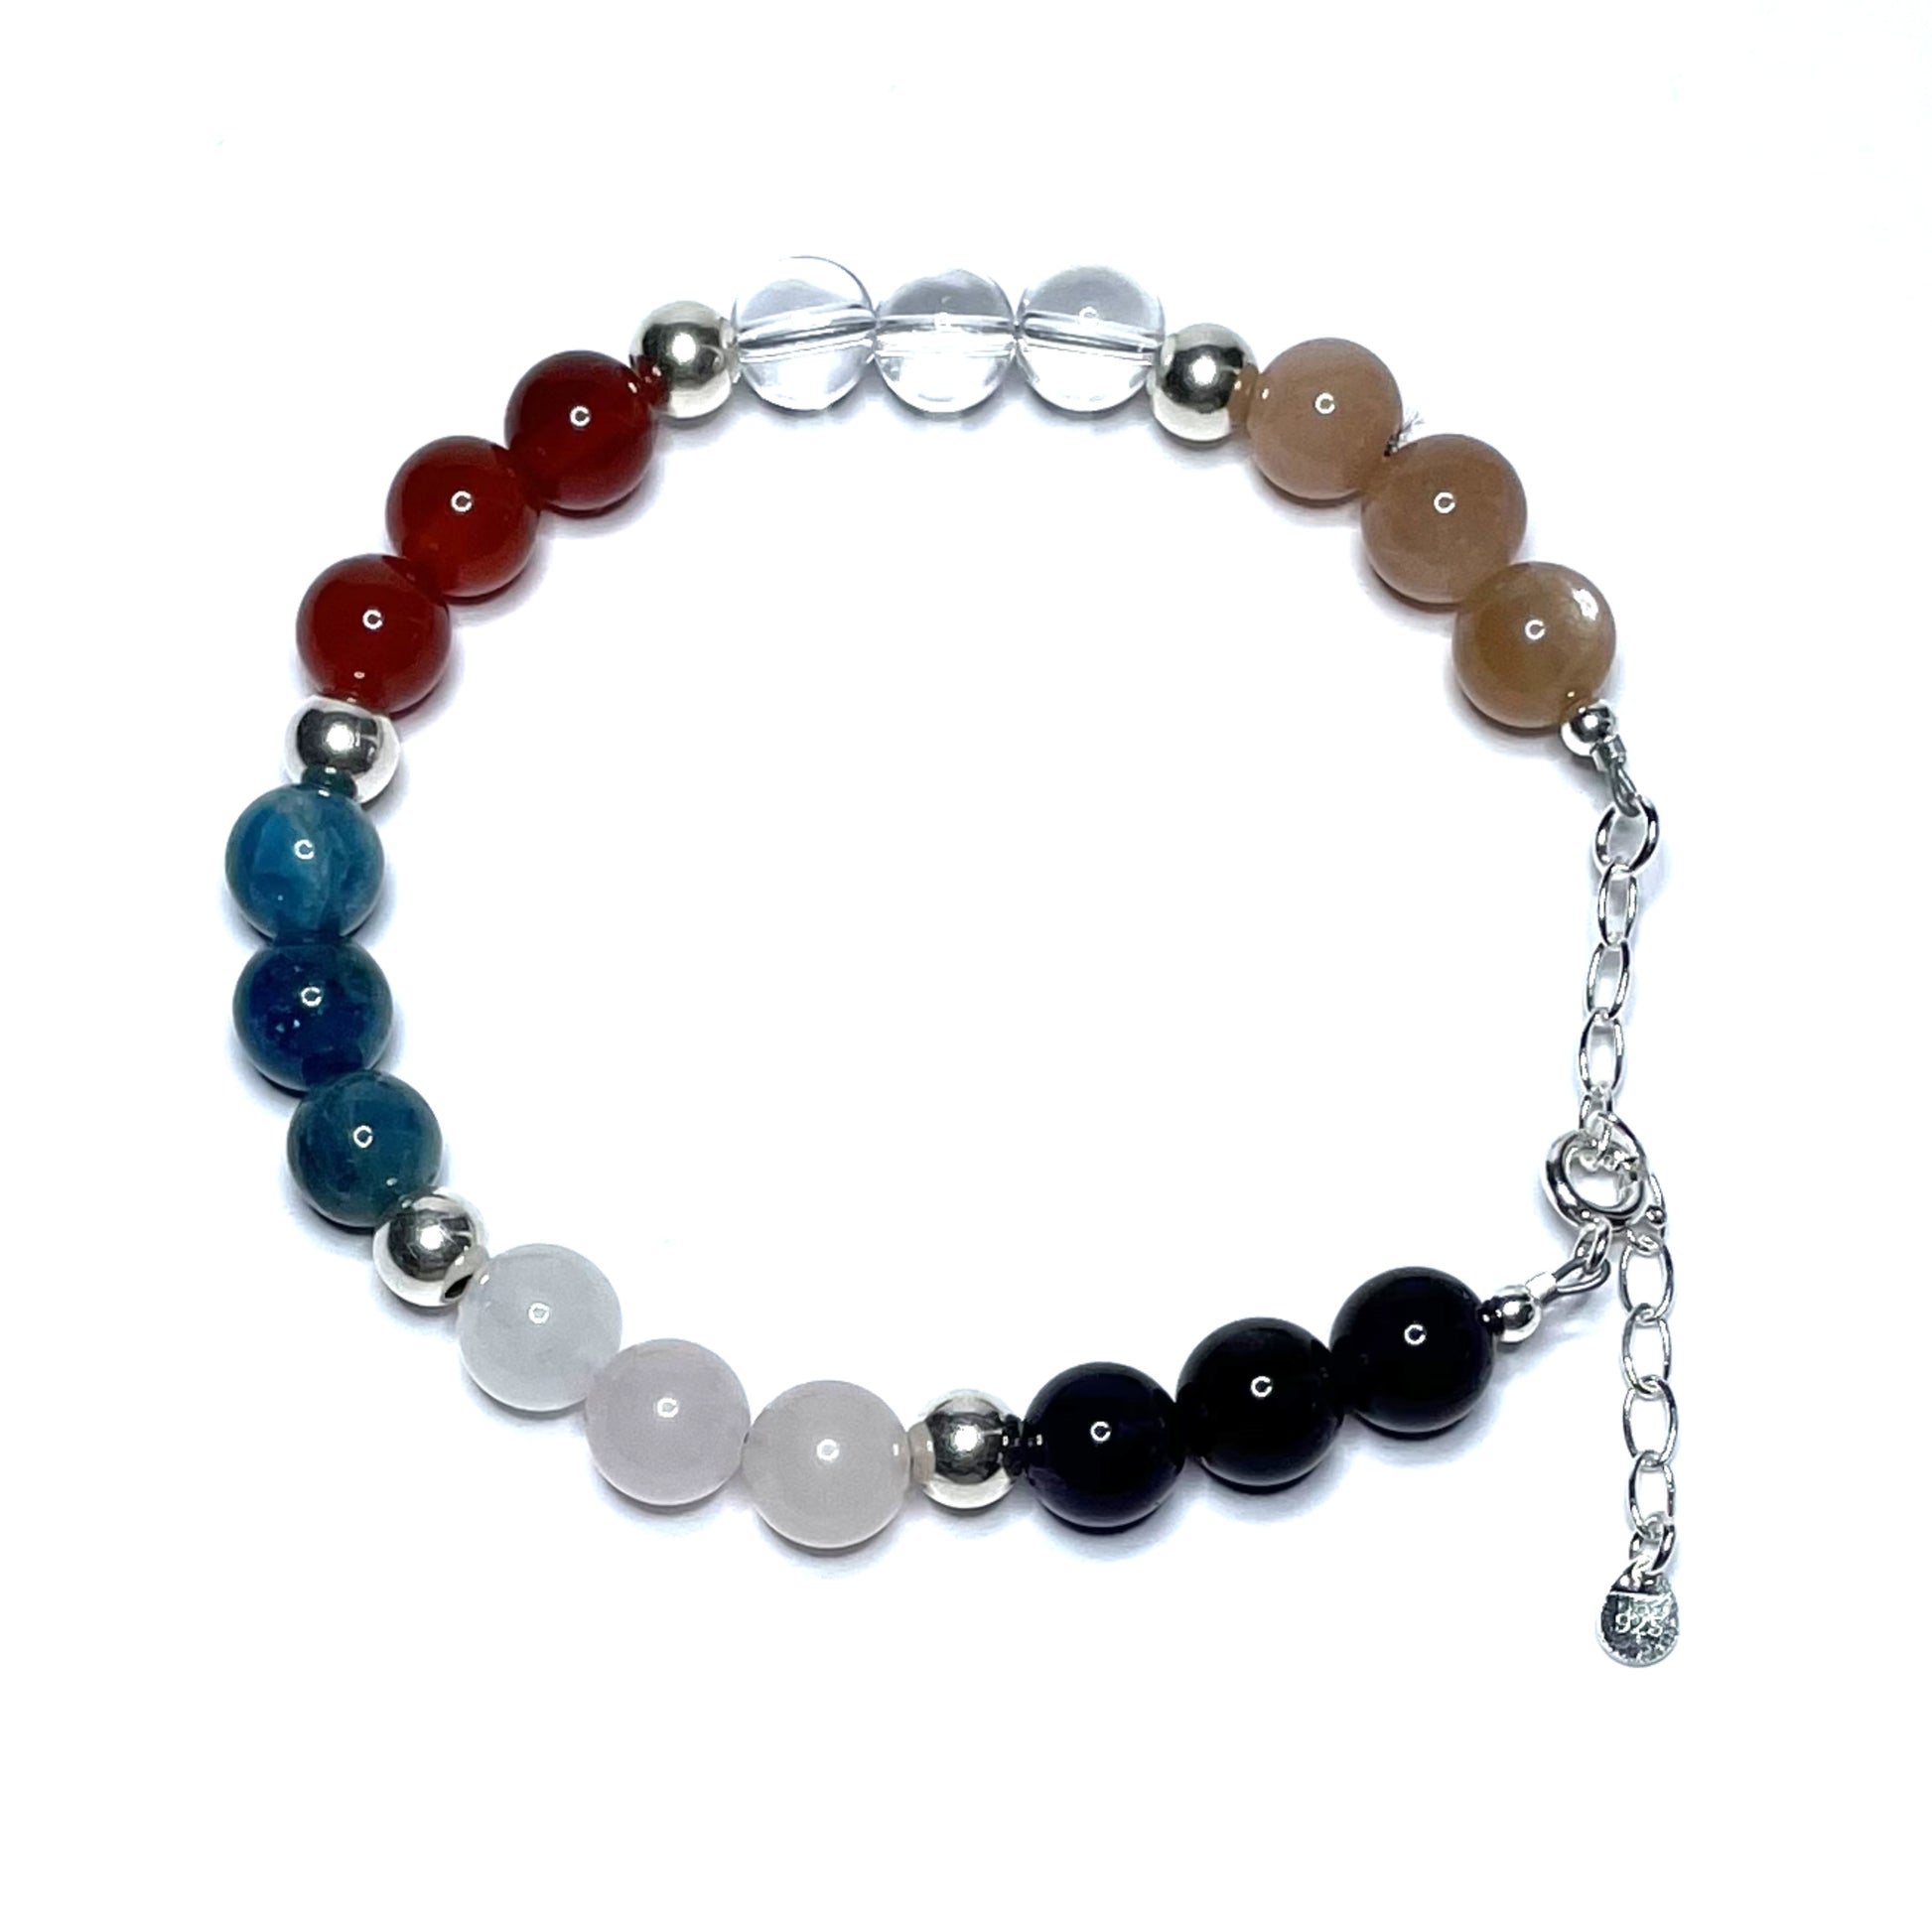 Weight loss crystal bead bracelet